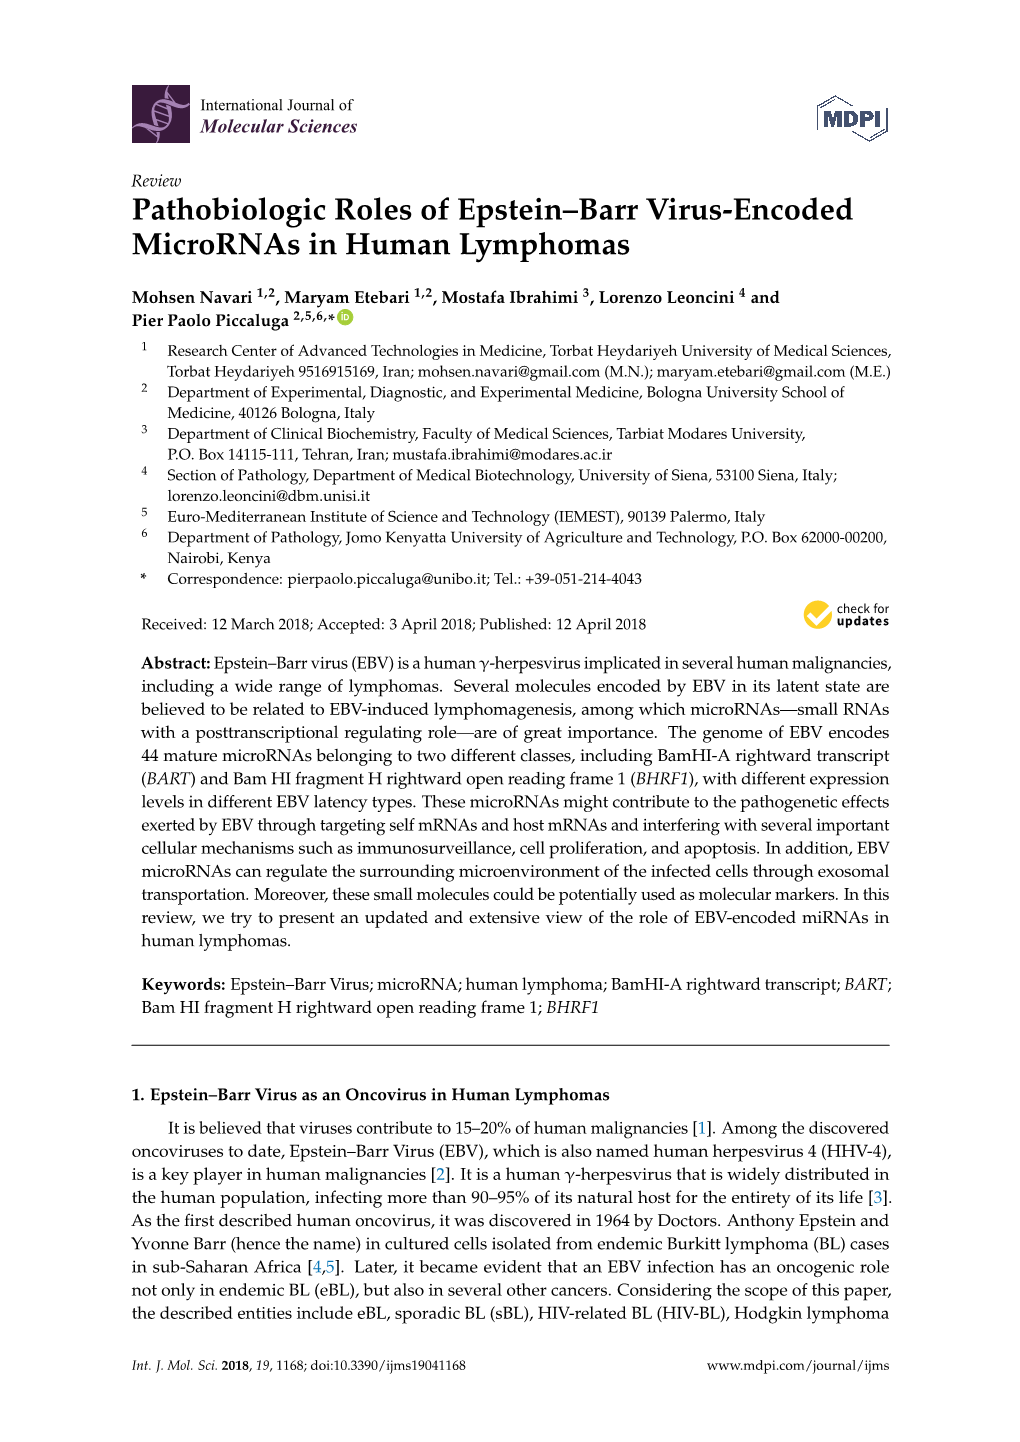 Pathobiologic Roles of Epstein–Barr Virus-Encoded Micrornas in Human Lymphomas